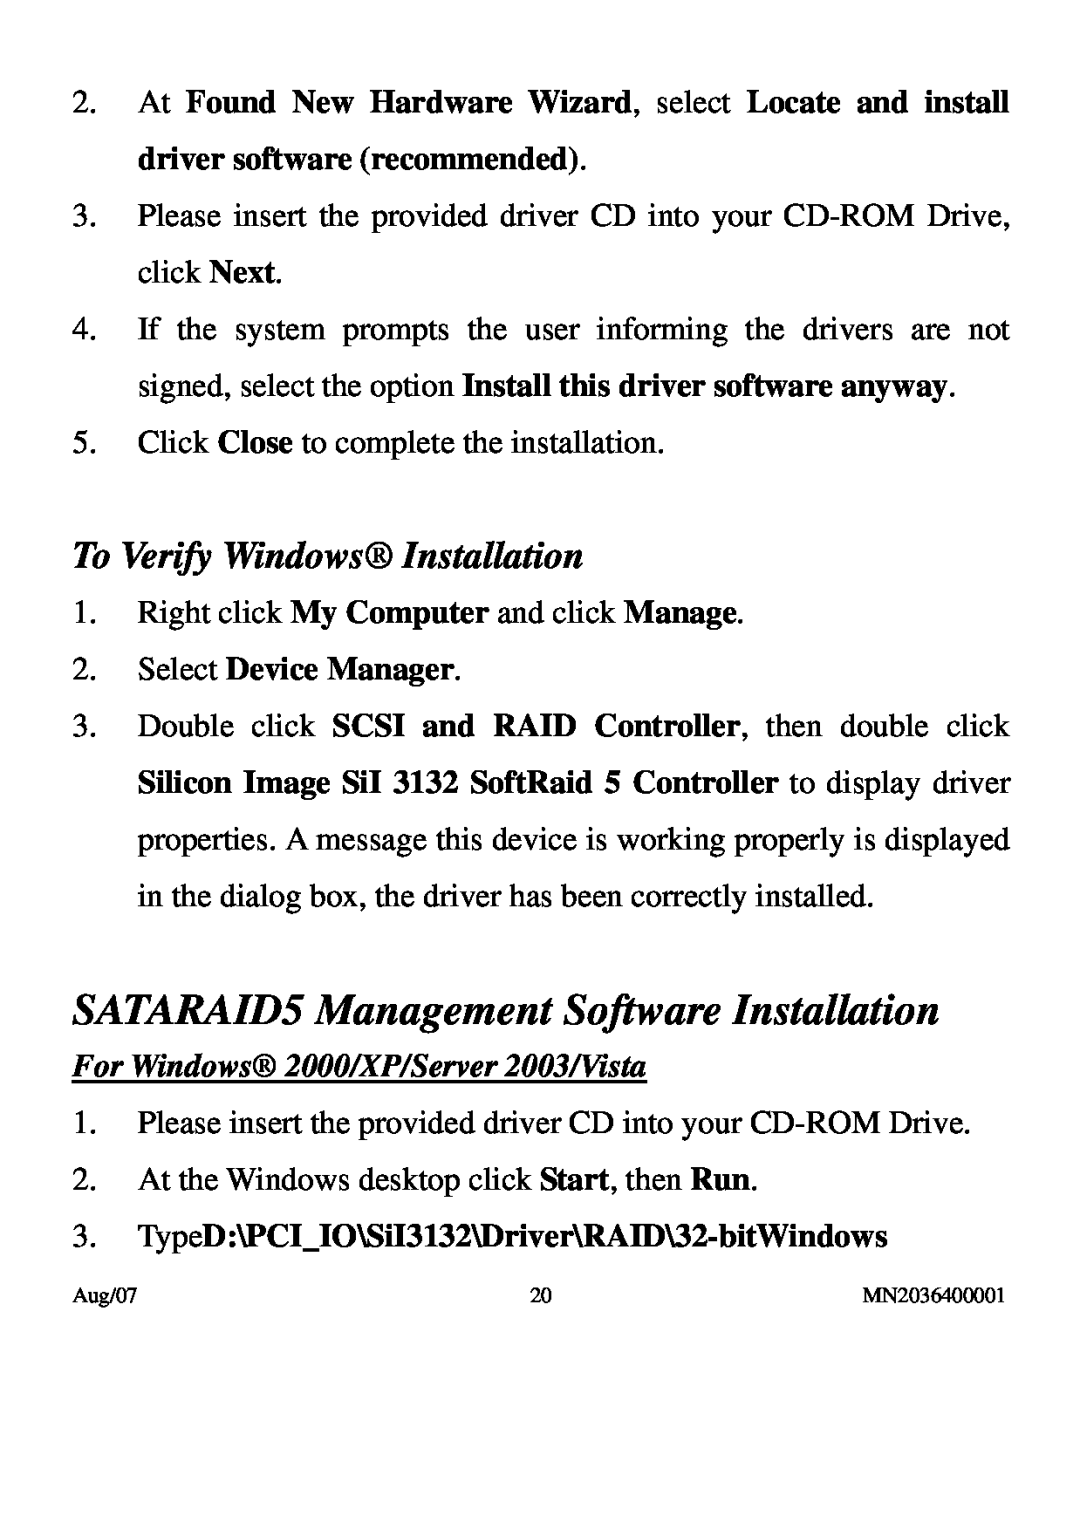 PNY P-DSA2-PCIE-RF SATARAID5 Management Software Installation, To Verify Windows Installation, Select Device Manager 